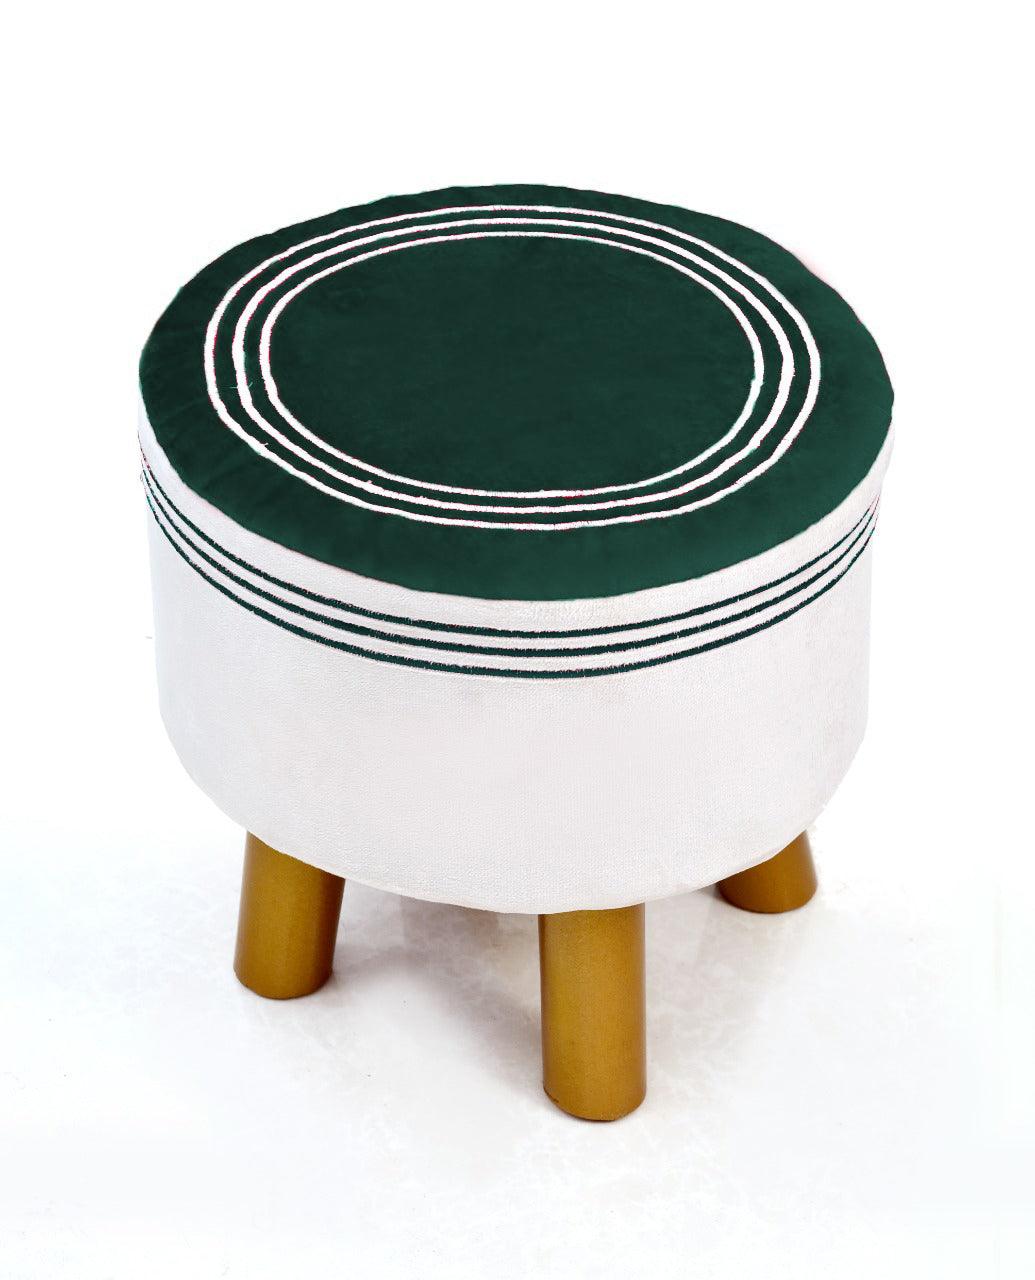 Wooden stool round shape-938 - 92Bedding